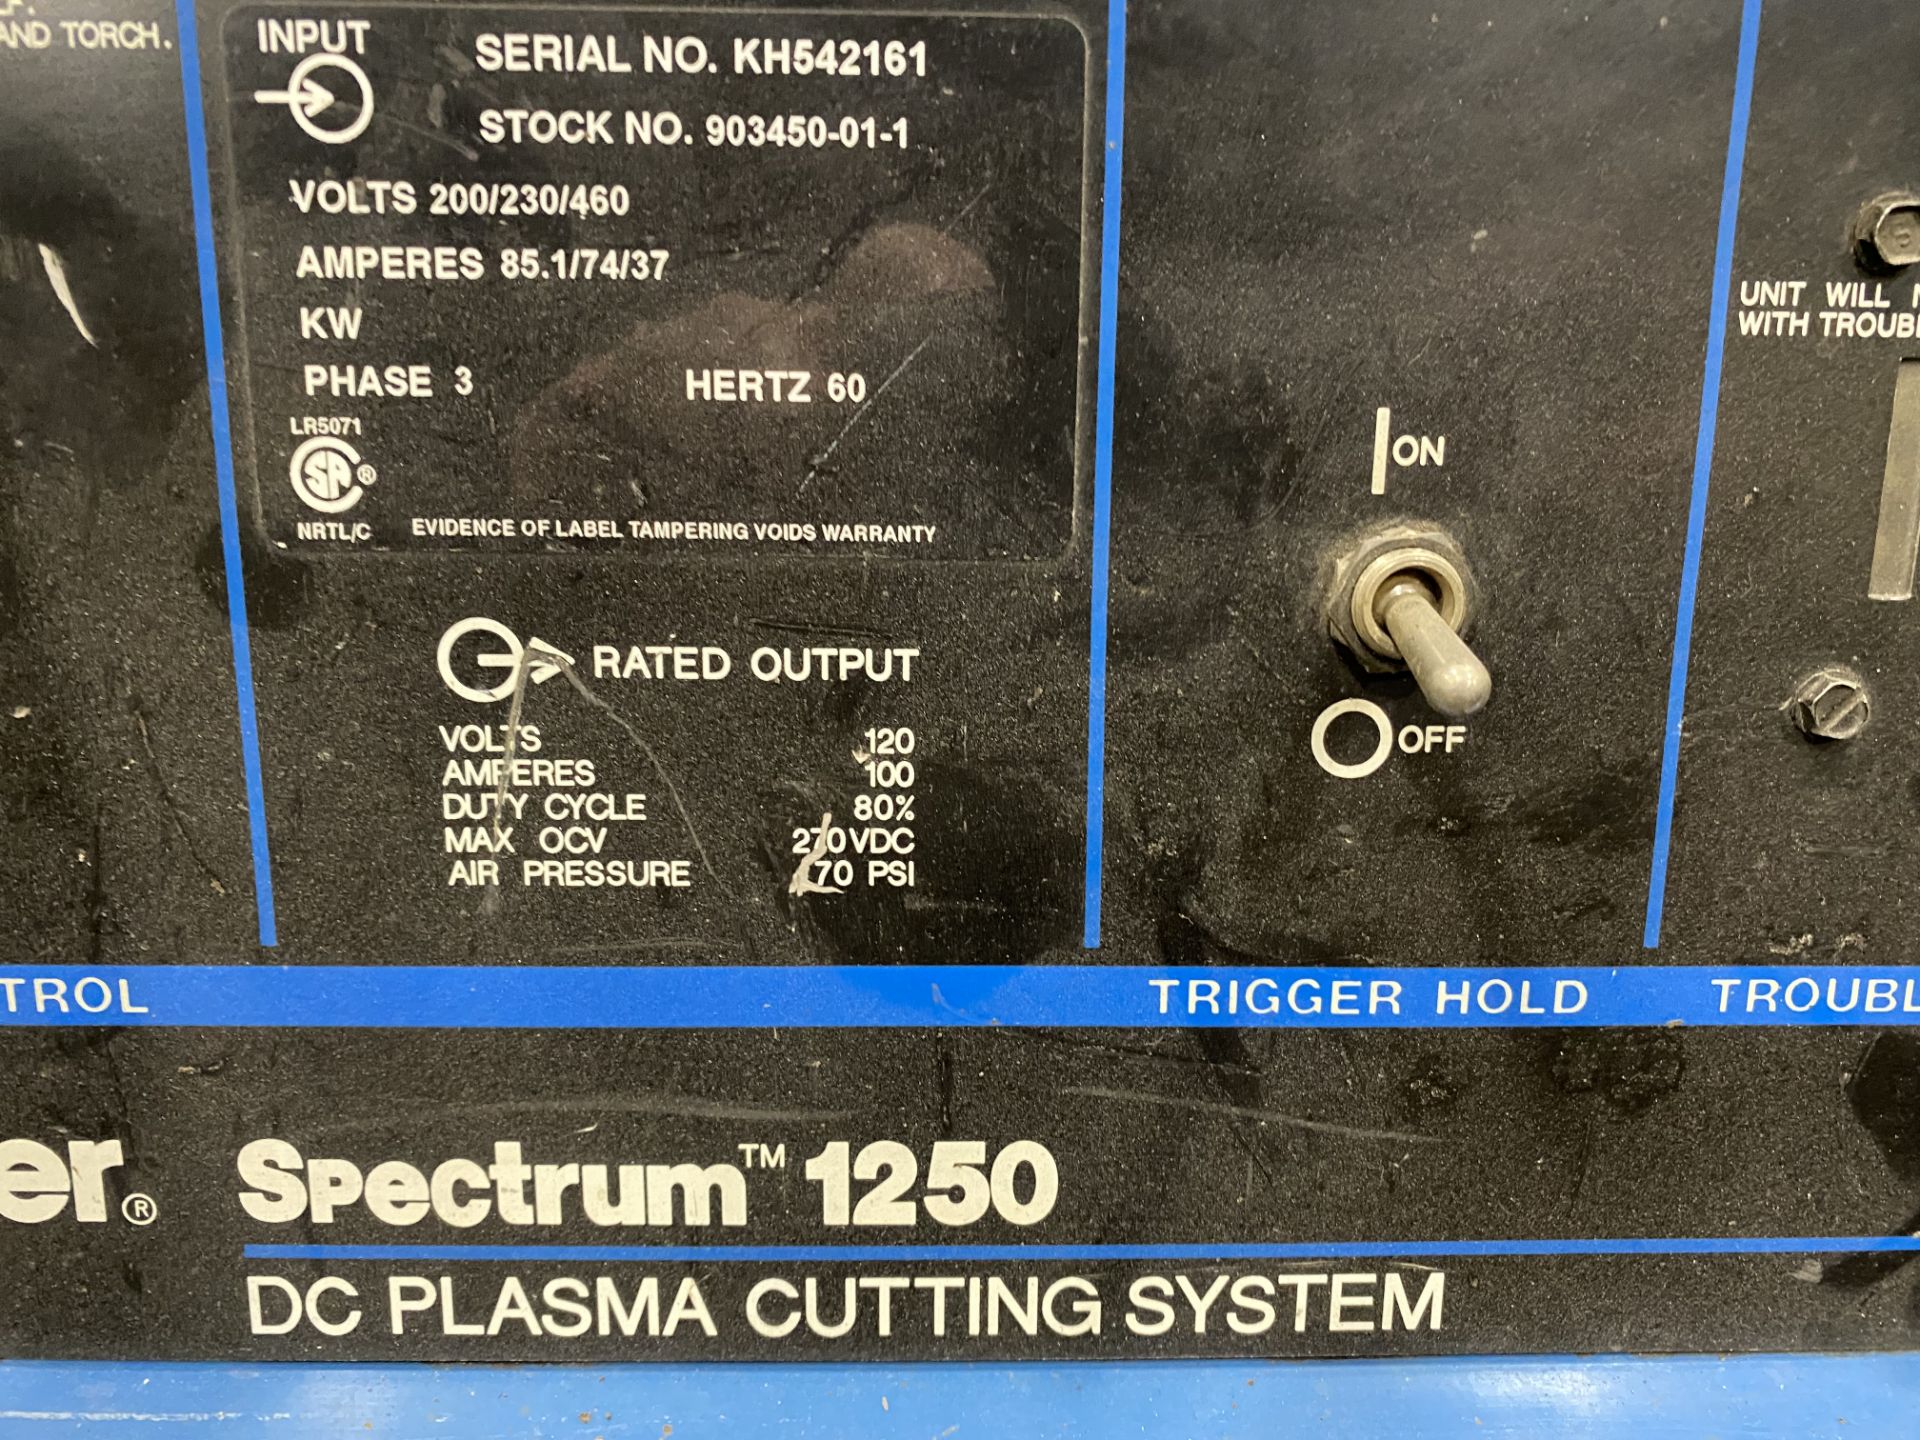 Miller Spectrum 1250, DC Plasma Cutting System - Image 2 of 2